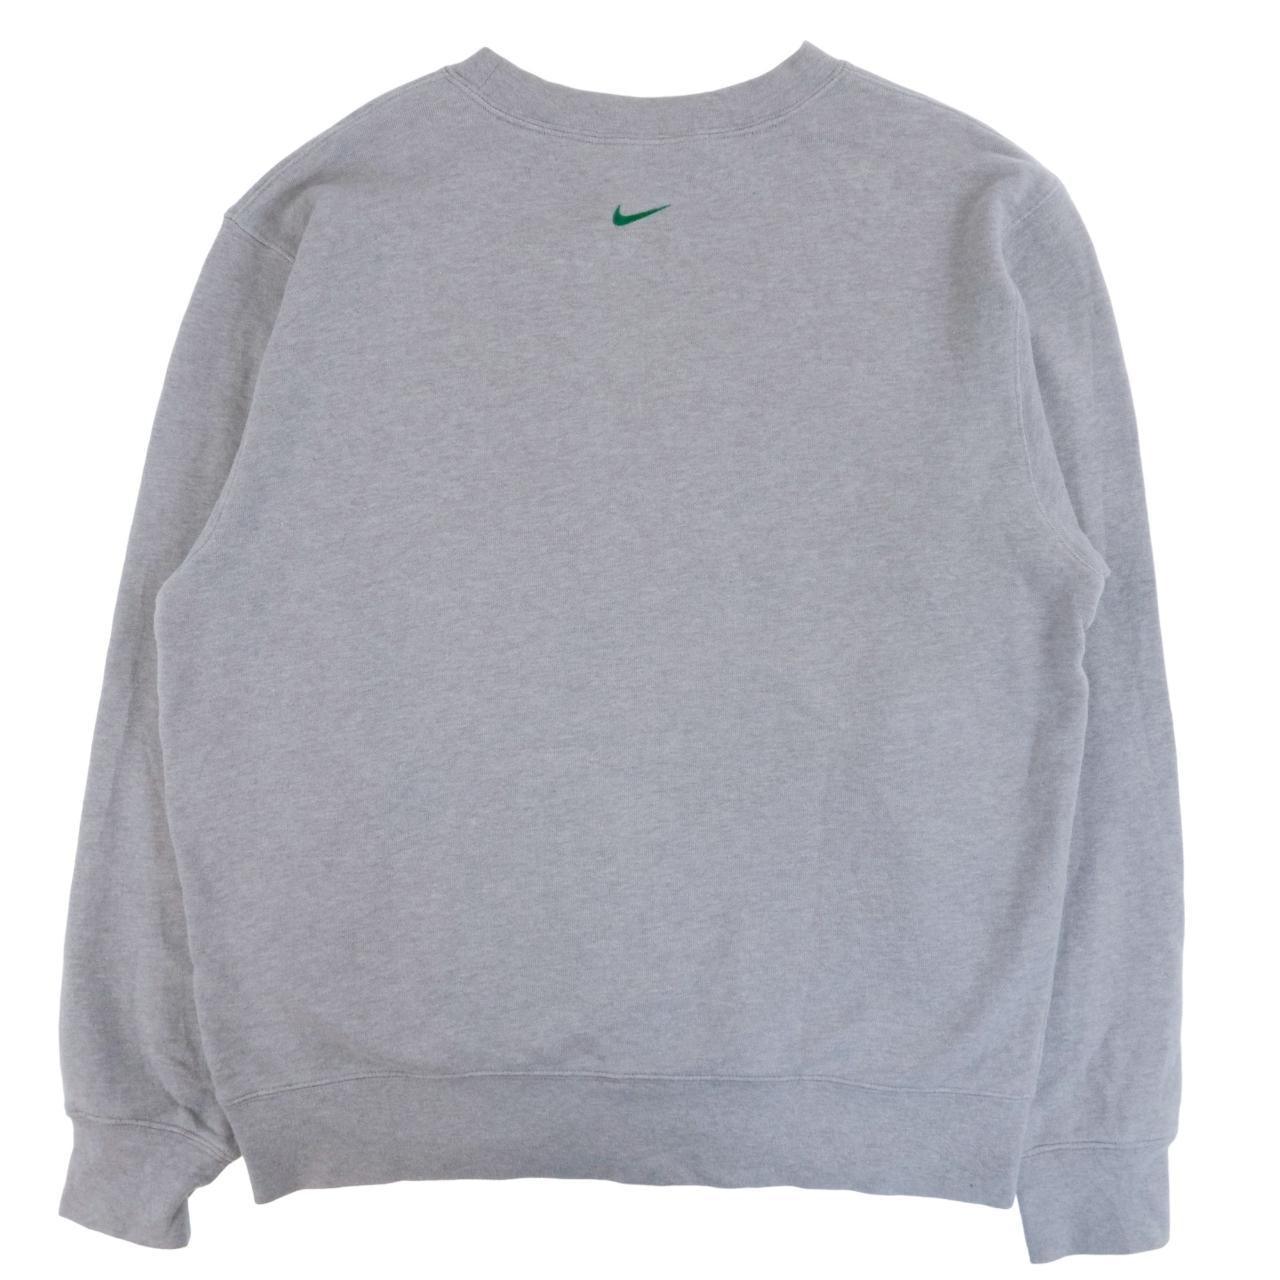 Vintage Nike Sports Sweatshirt Size M - Known Source